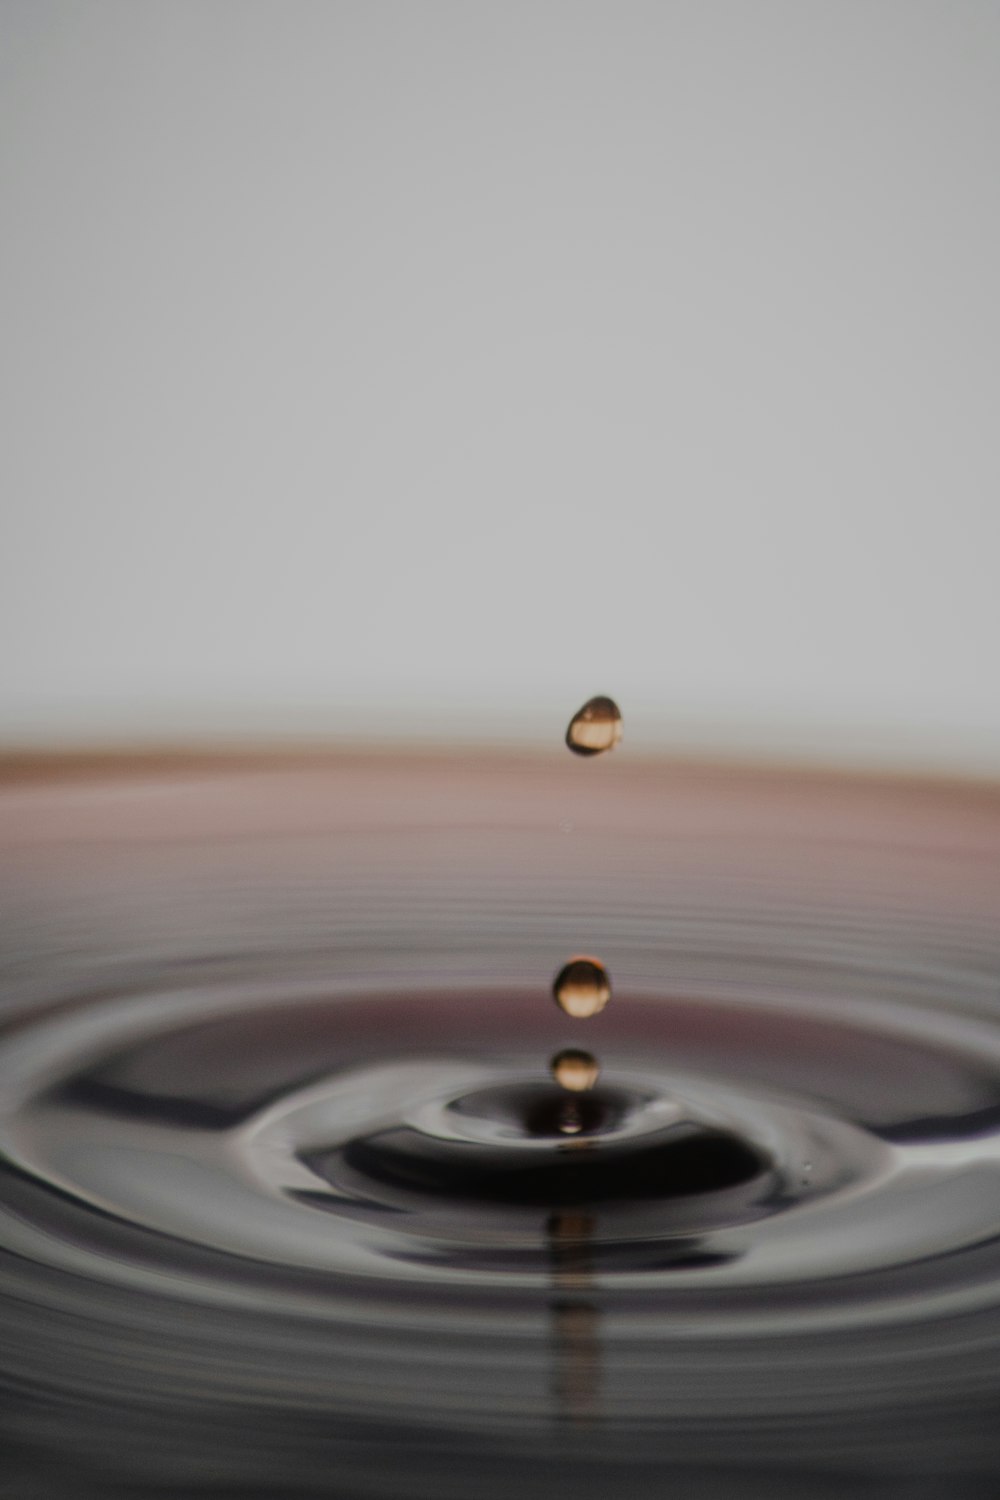 water drop on stainless steel sink